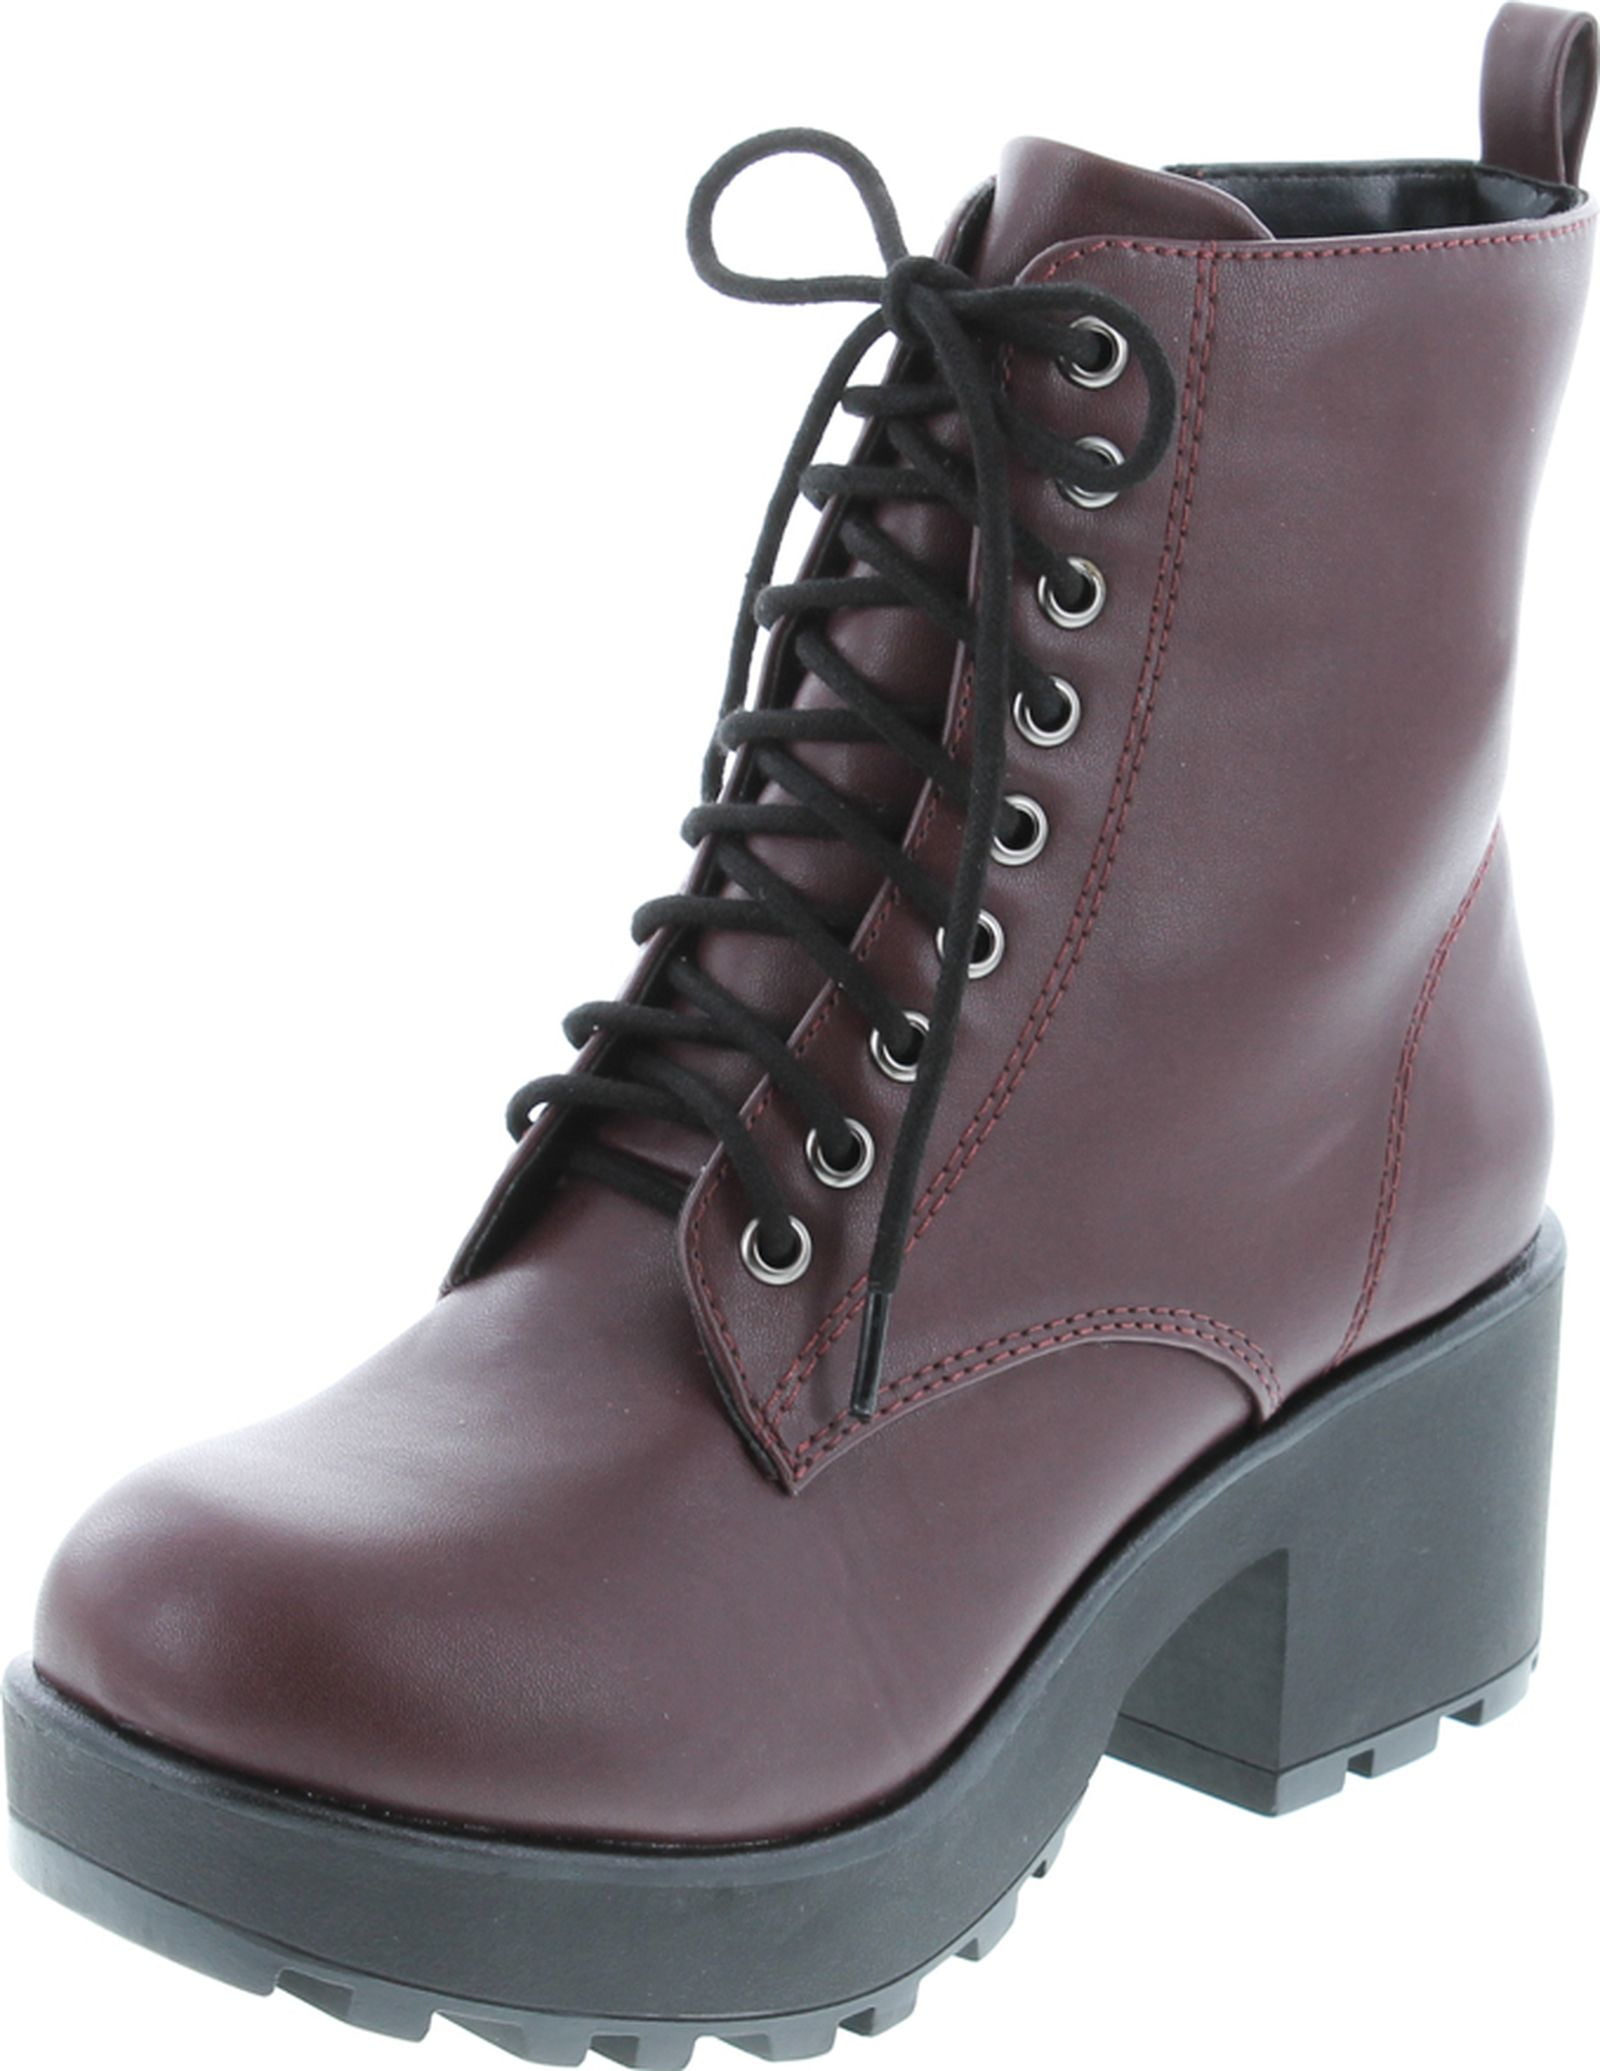 Women  PU Leather Lace Up Platform Block High Heel Buckle Boots Shoes Plus 4-13@